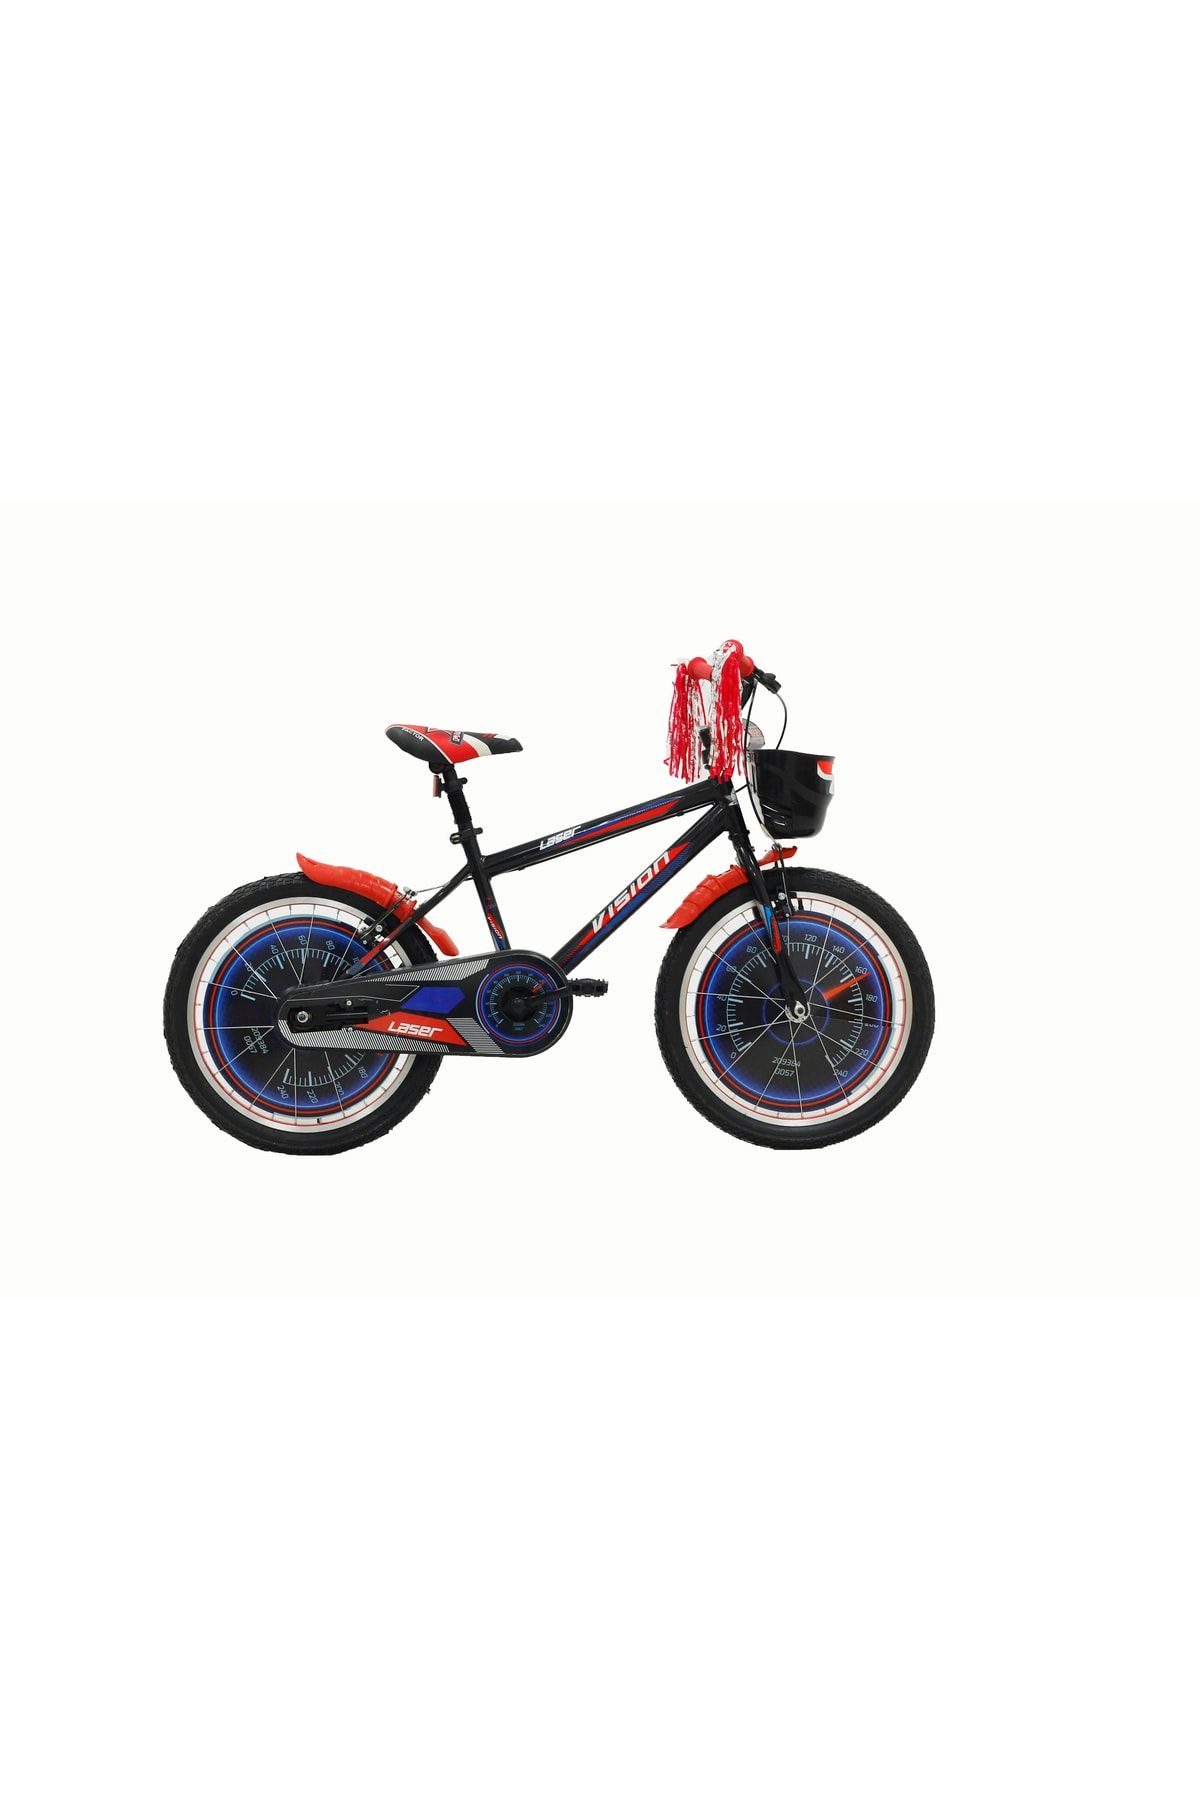 Vision Belderia Laser 20" Jant Vitessiz V-fren Siyah-kırmızı Çocuk Bisikleti